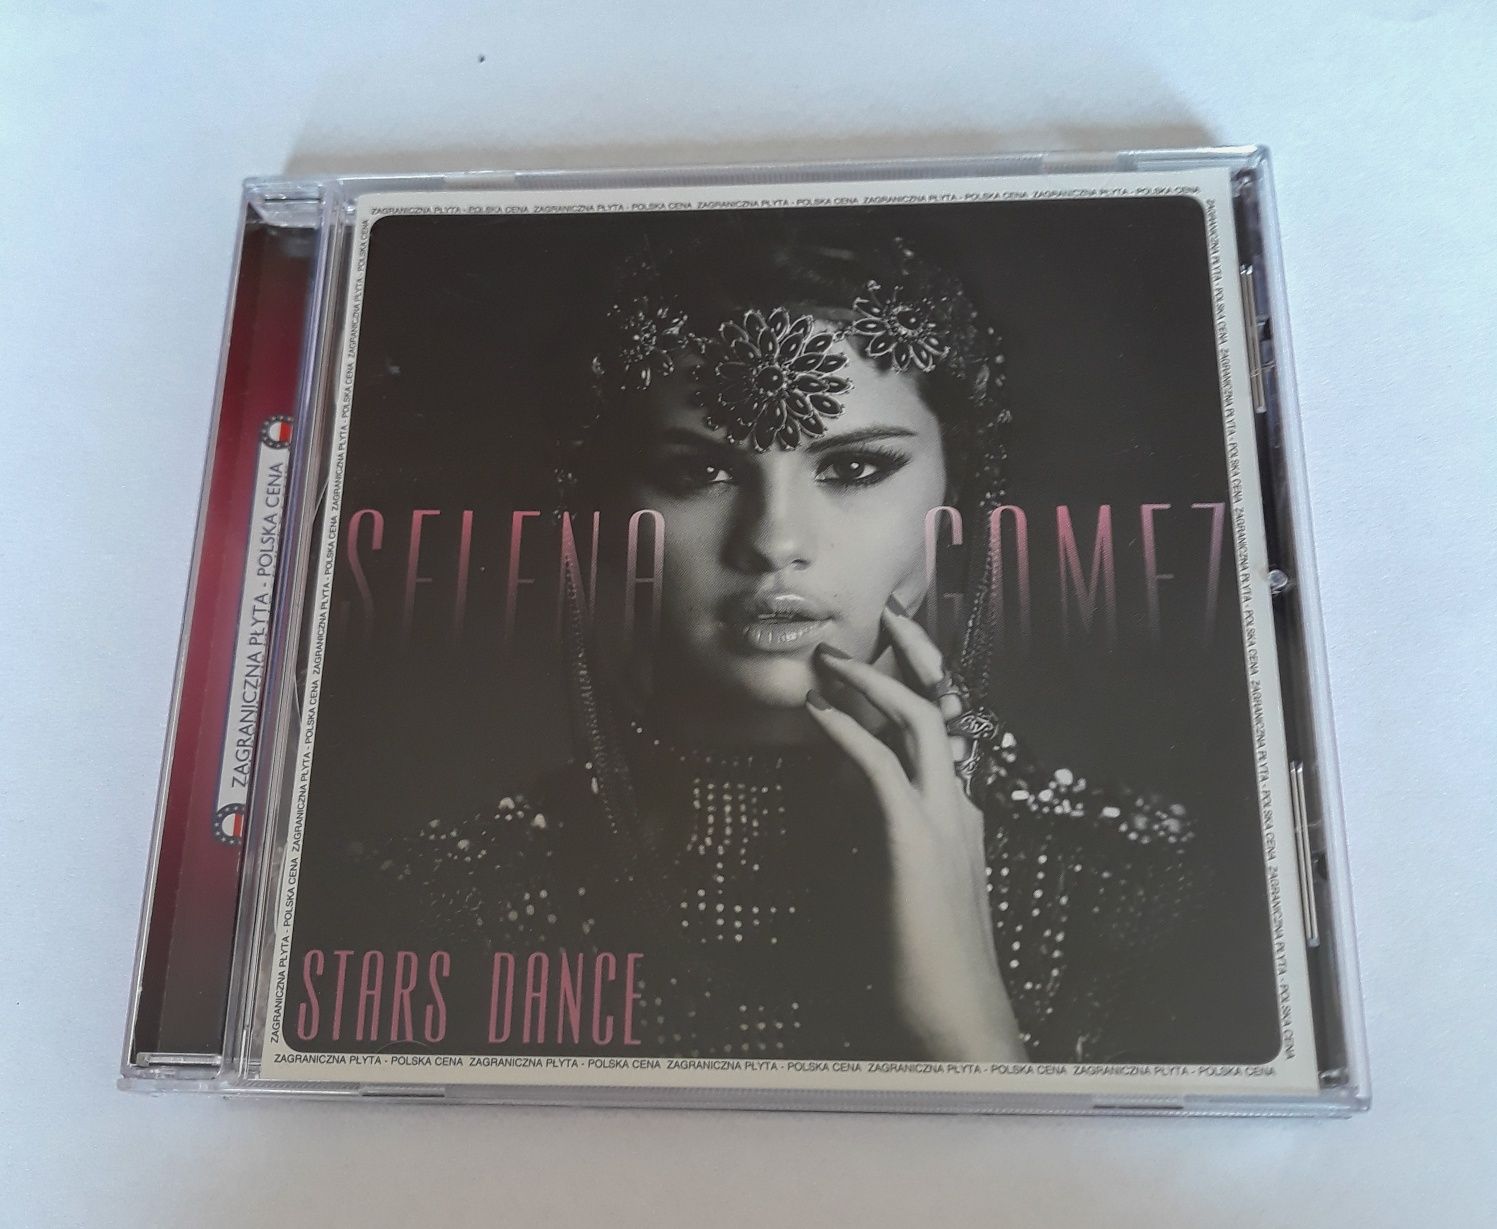 Selena Gomez "Stars Dance"